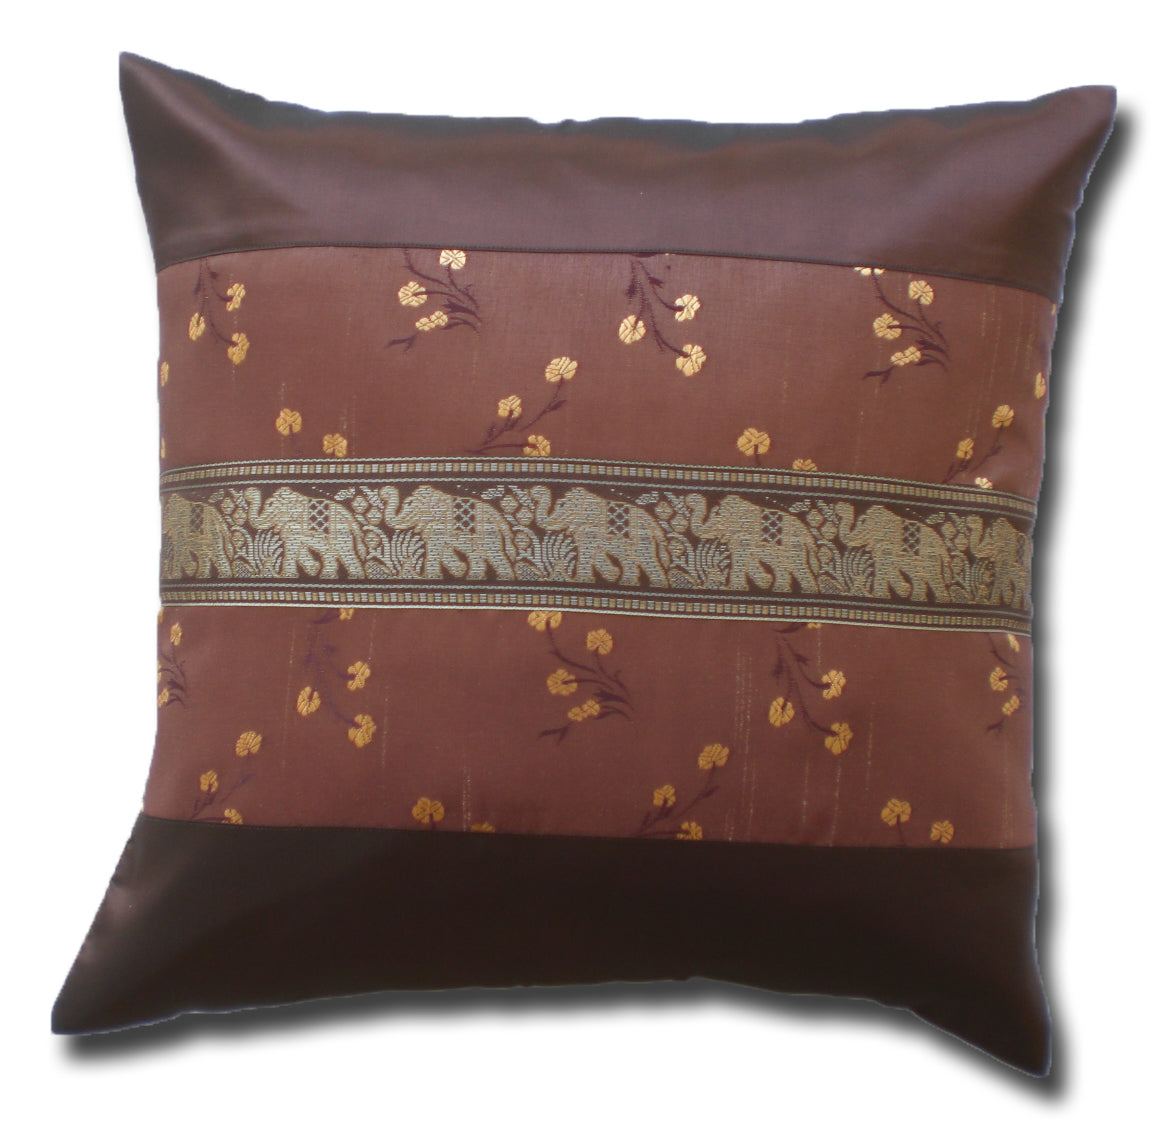 Pillow Cushion Cover Motif Flowers Elephants Various Colors 40x40cm/15.5x15.5in Thai Silk Sofa Bed Garden Chair